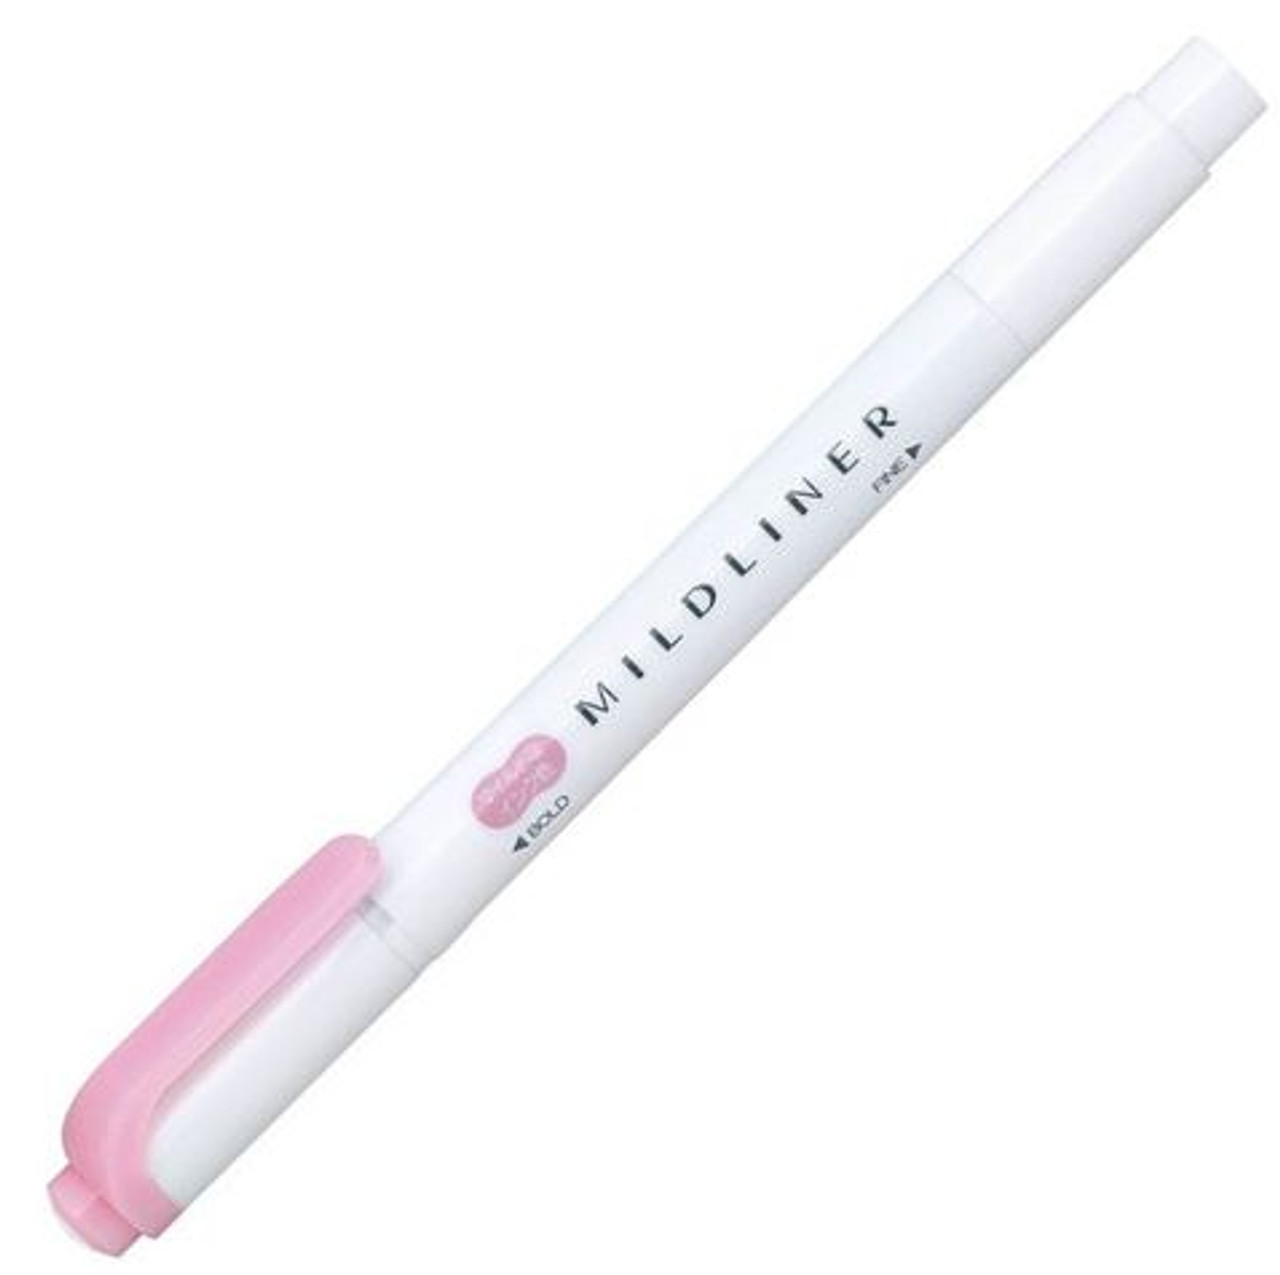 Zebra Mildliner Brush Pen Mild Pink